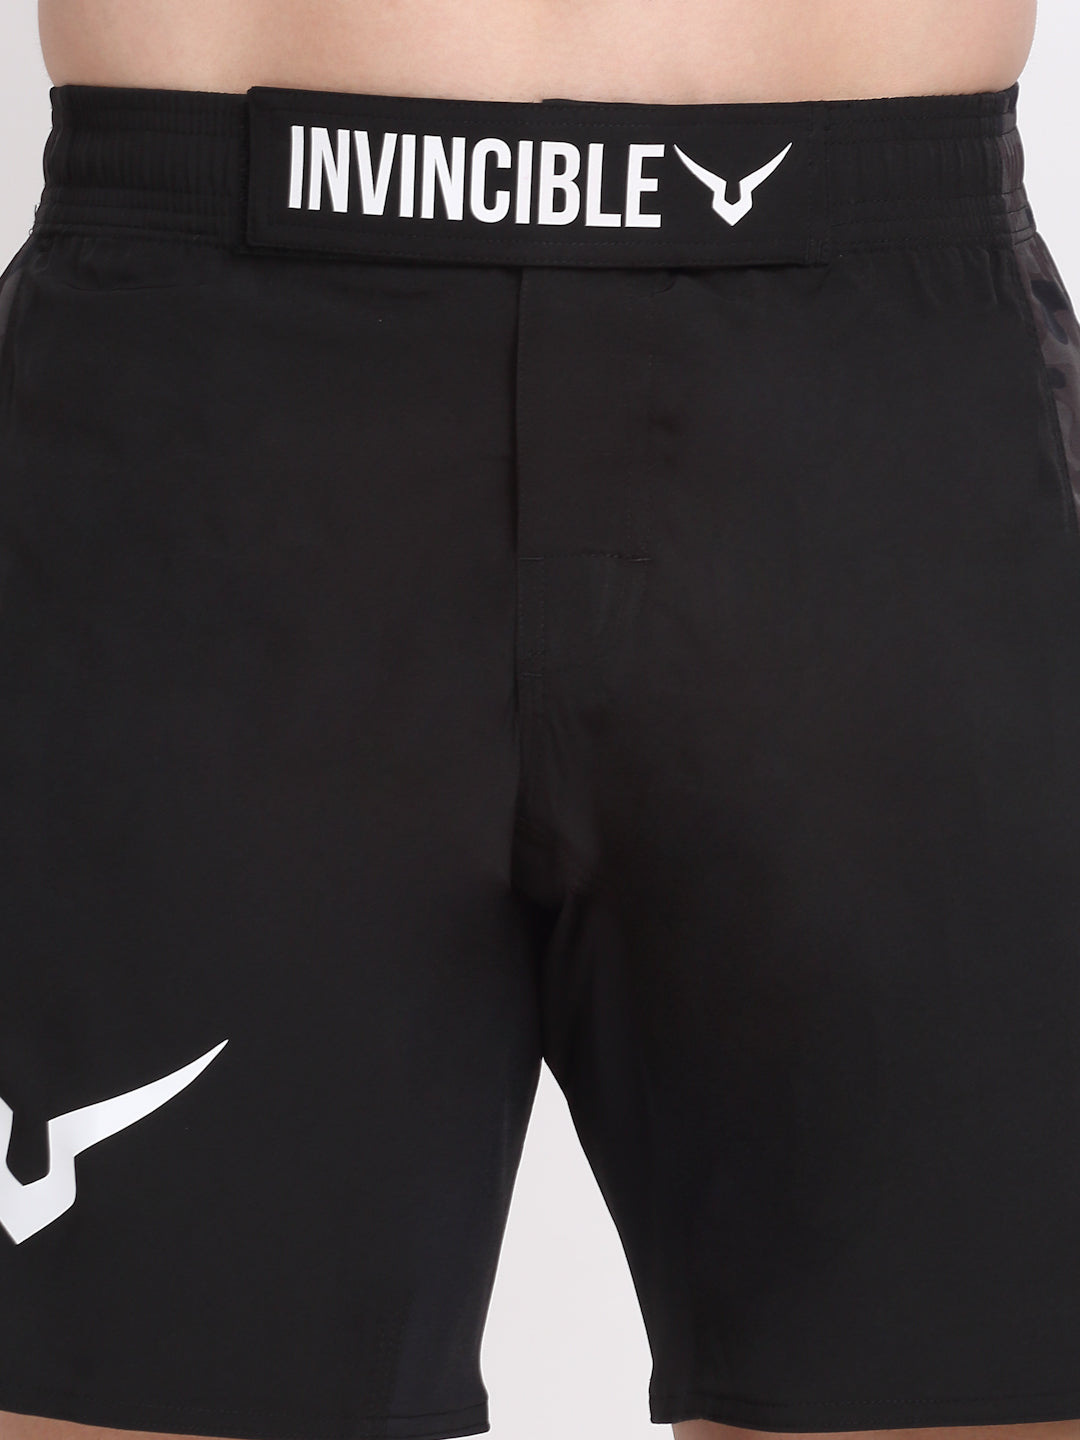 Invincible Men's MMA Training Shorts